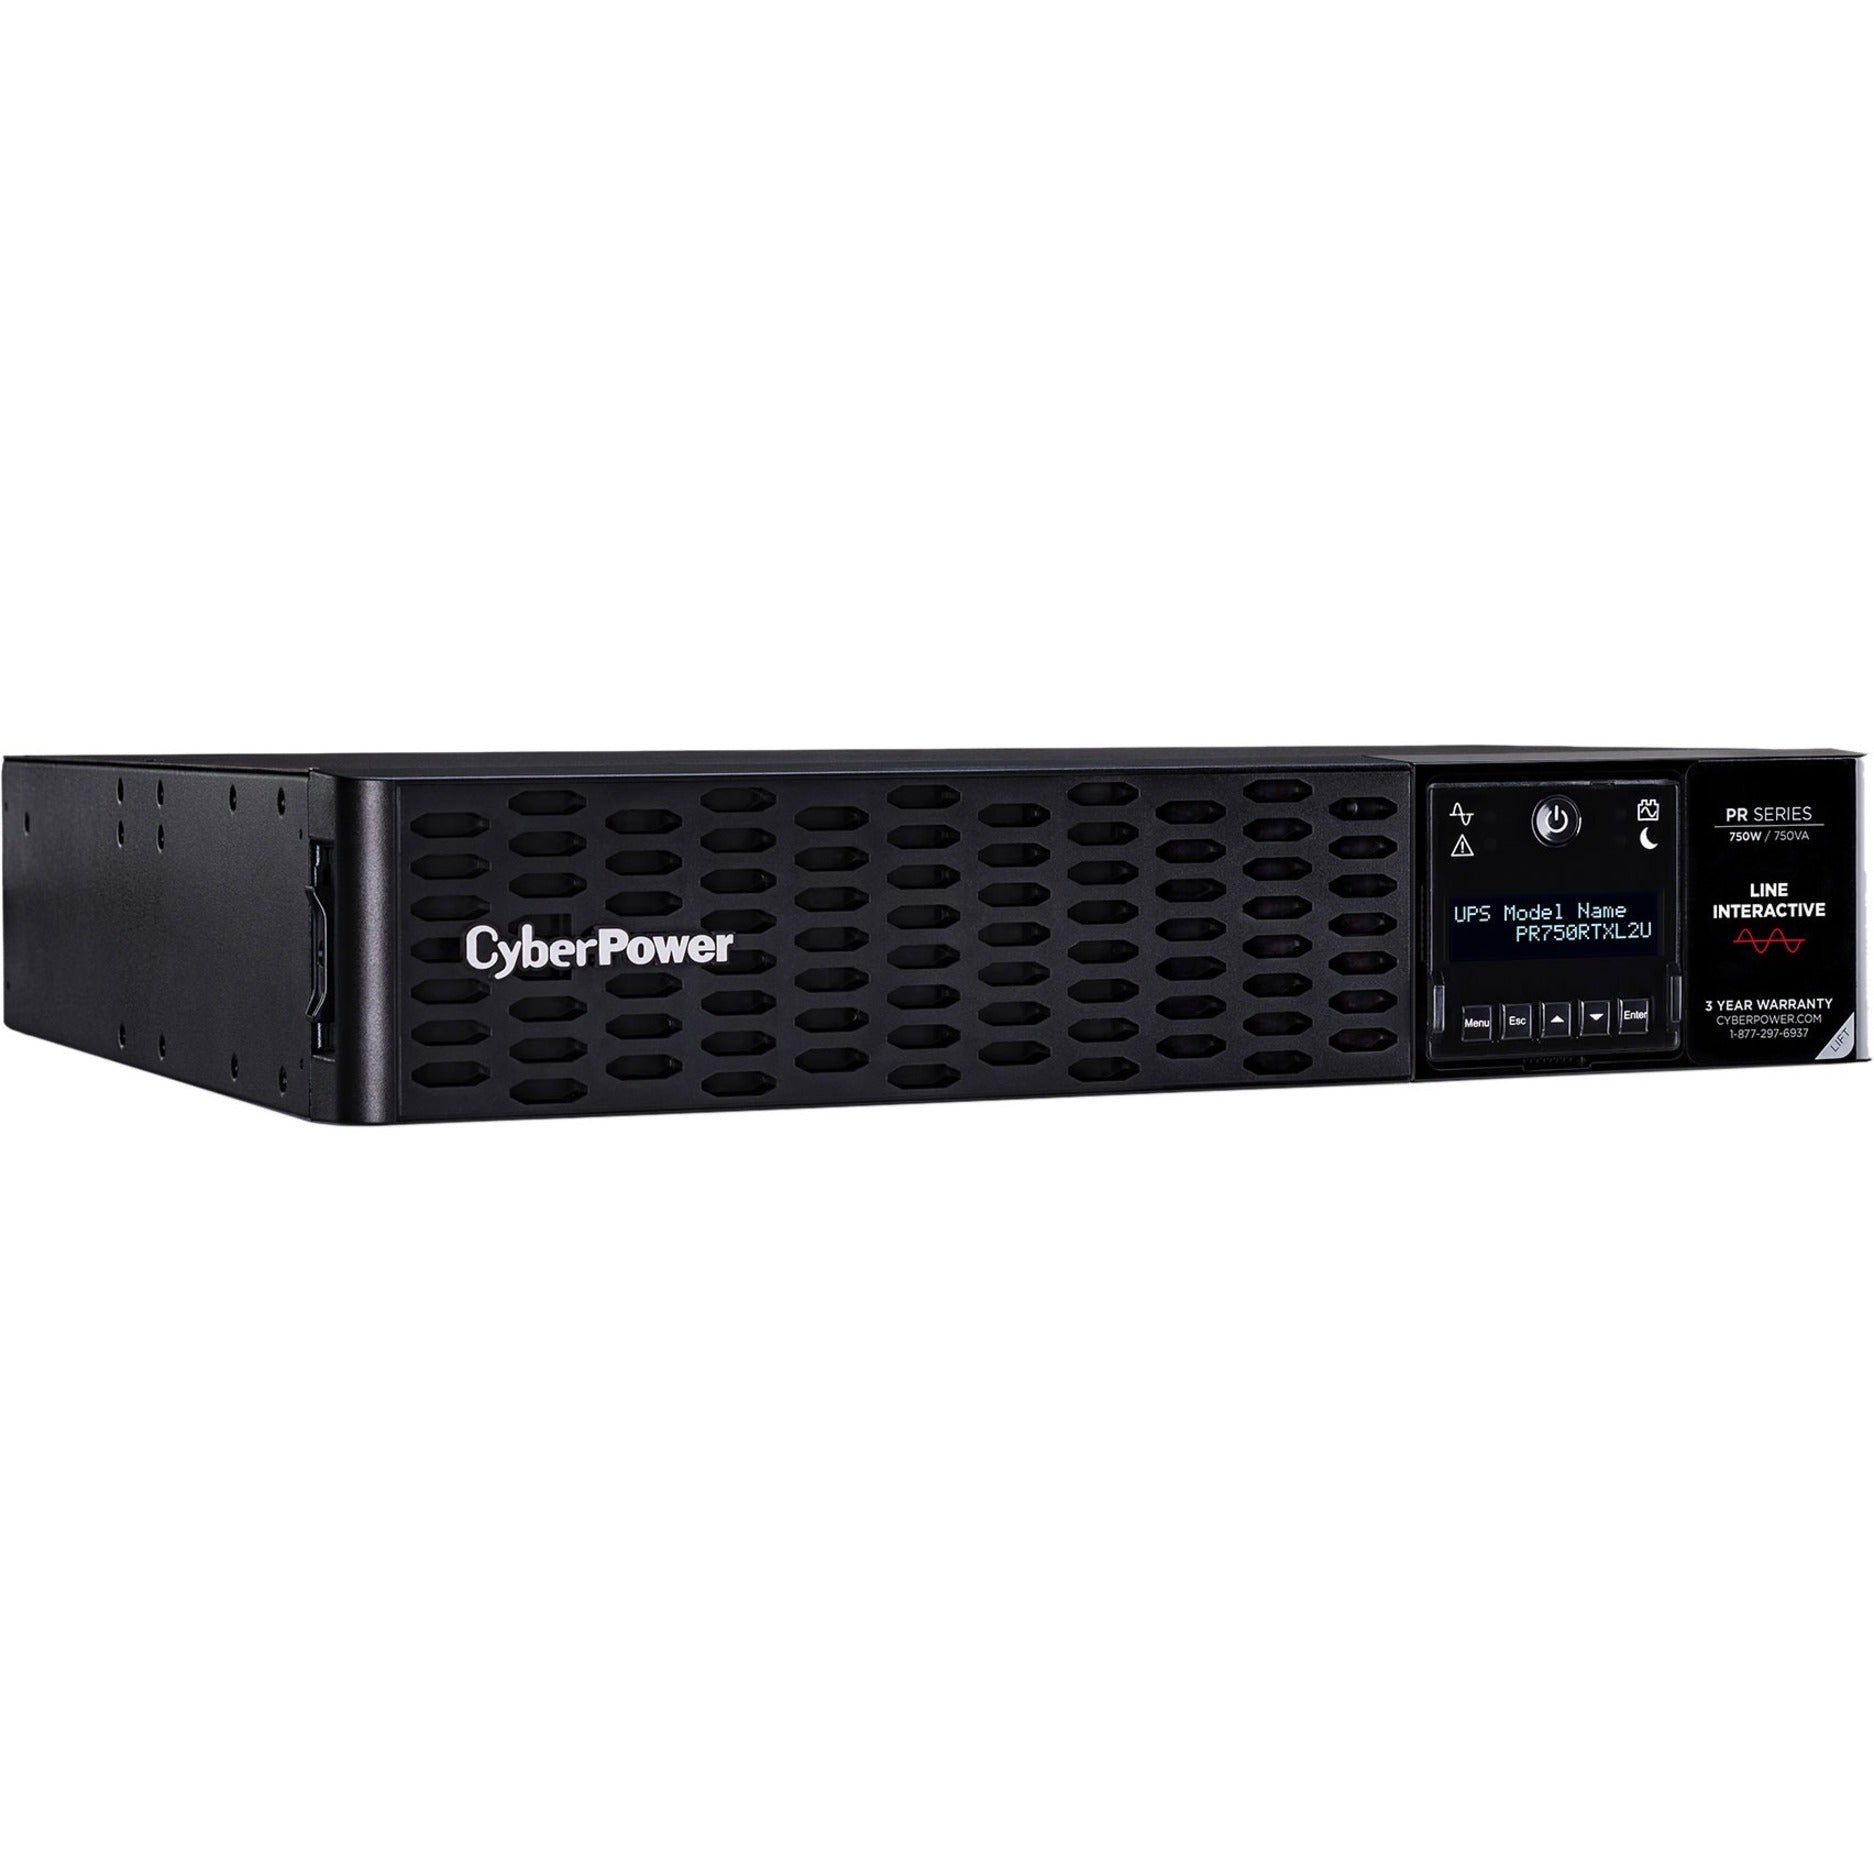 CyberPower PR750RTXL2U Smart App Sinewave UPS, 750VA Tower/Rack Convertible, 3-Year Warranty